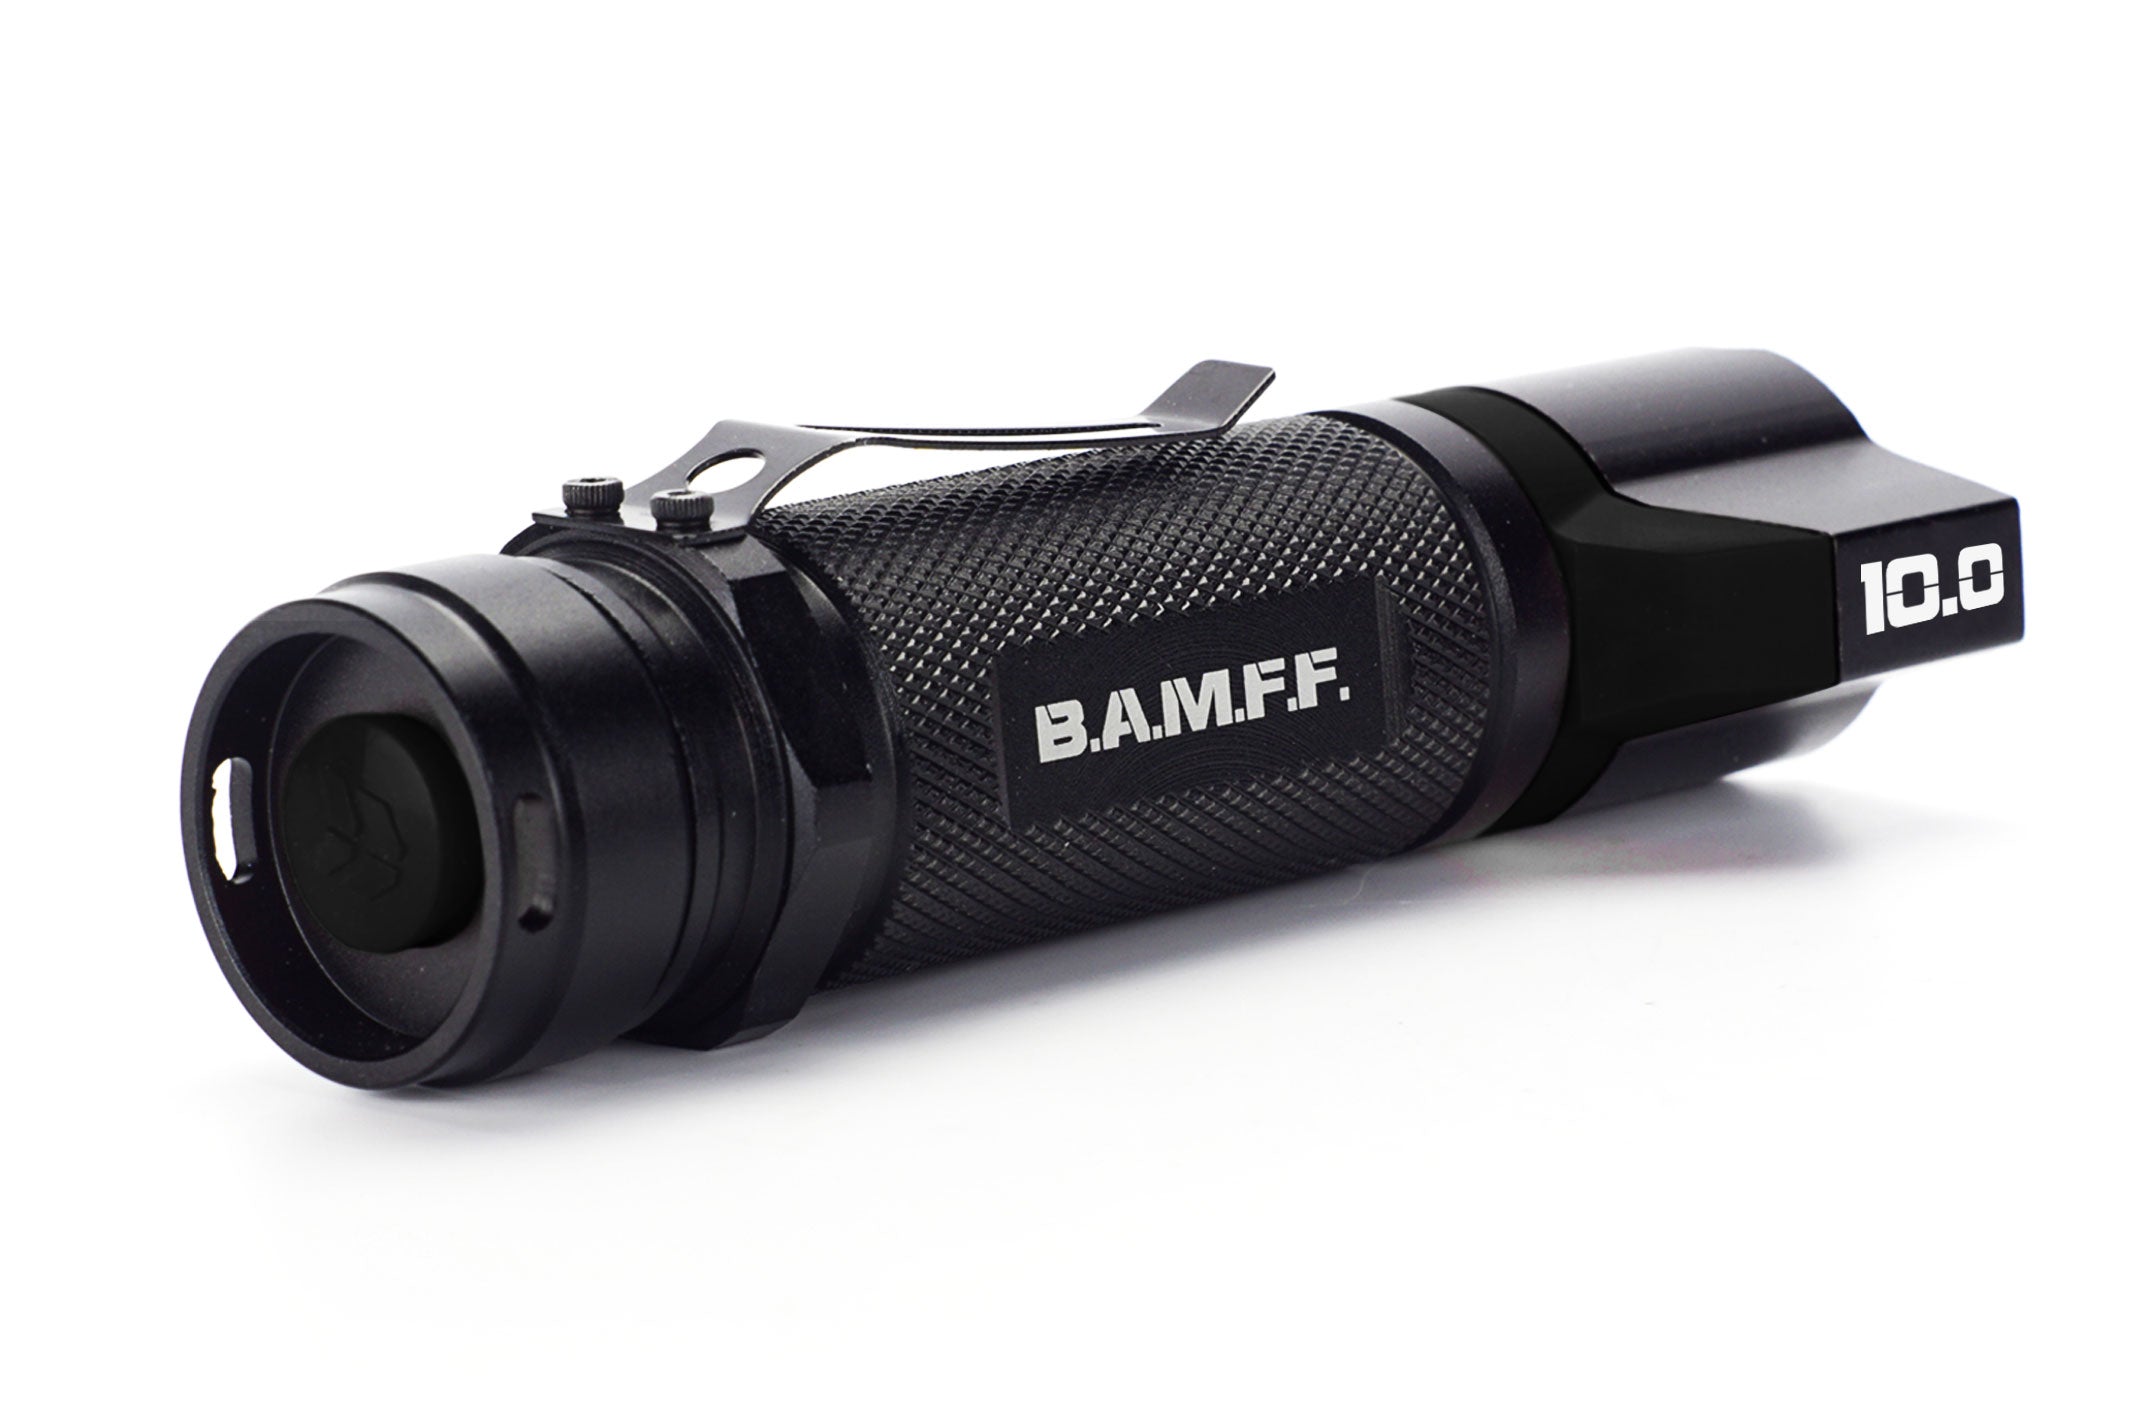 3 quarter view of the BAMFF 10.0 Tactical Flashlight